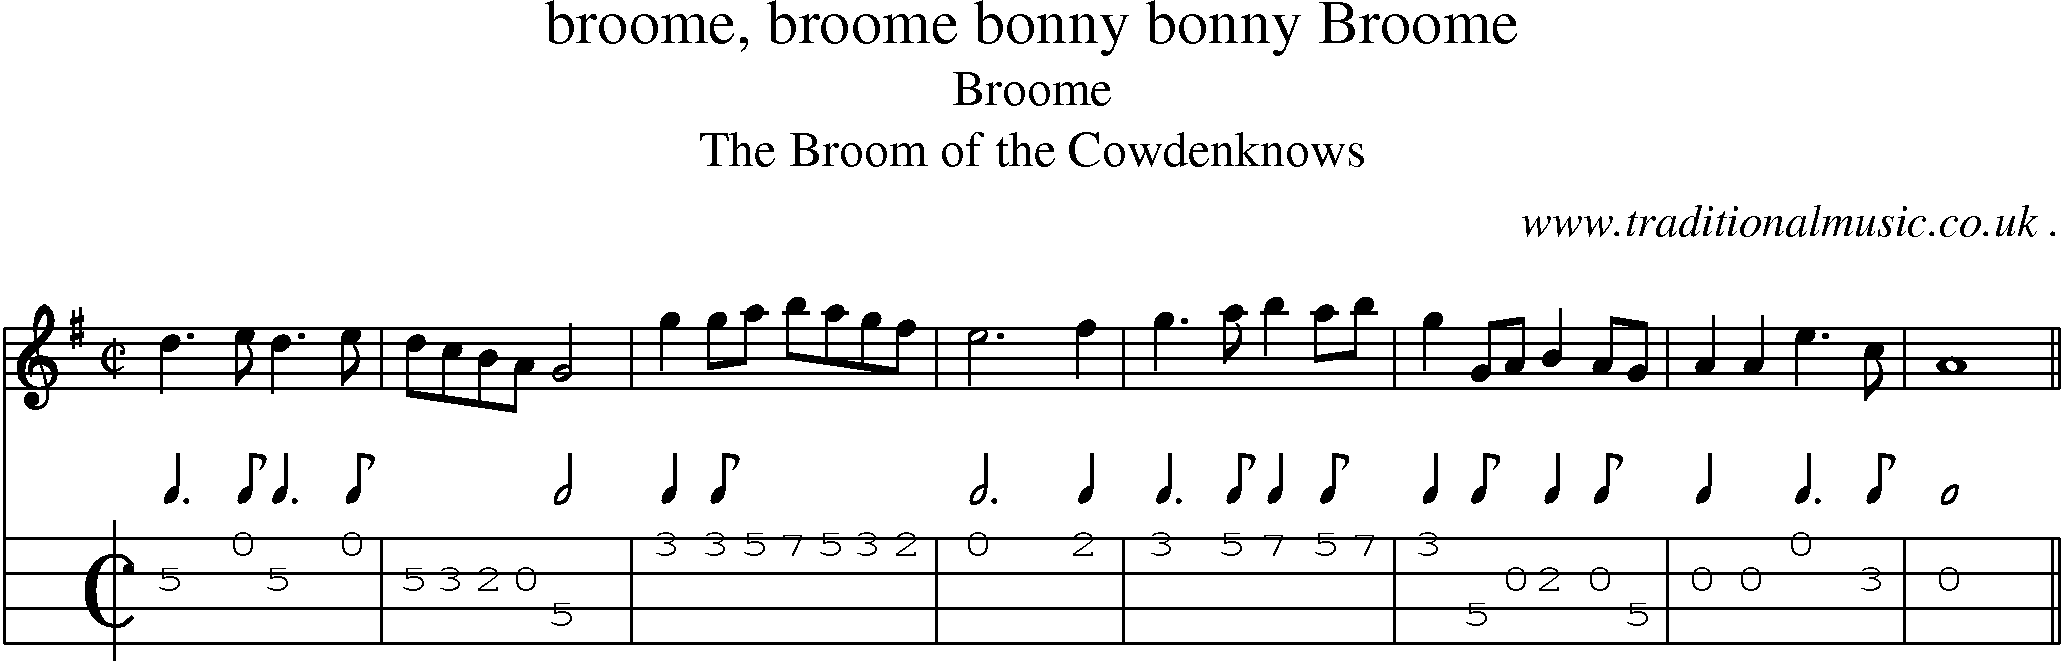 Sheet-Music and Mandolin Tabs for Broome Broome Bonny Bonny Broome